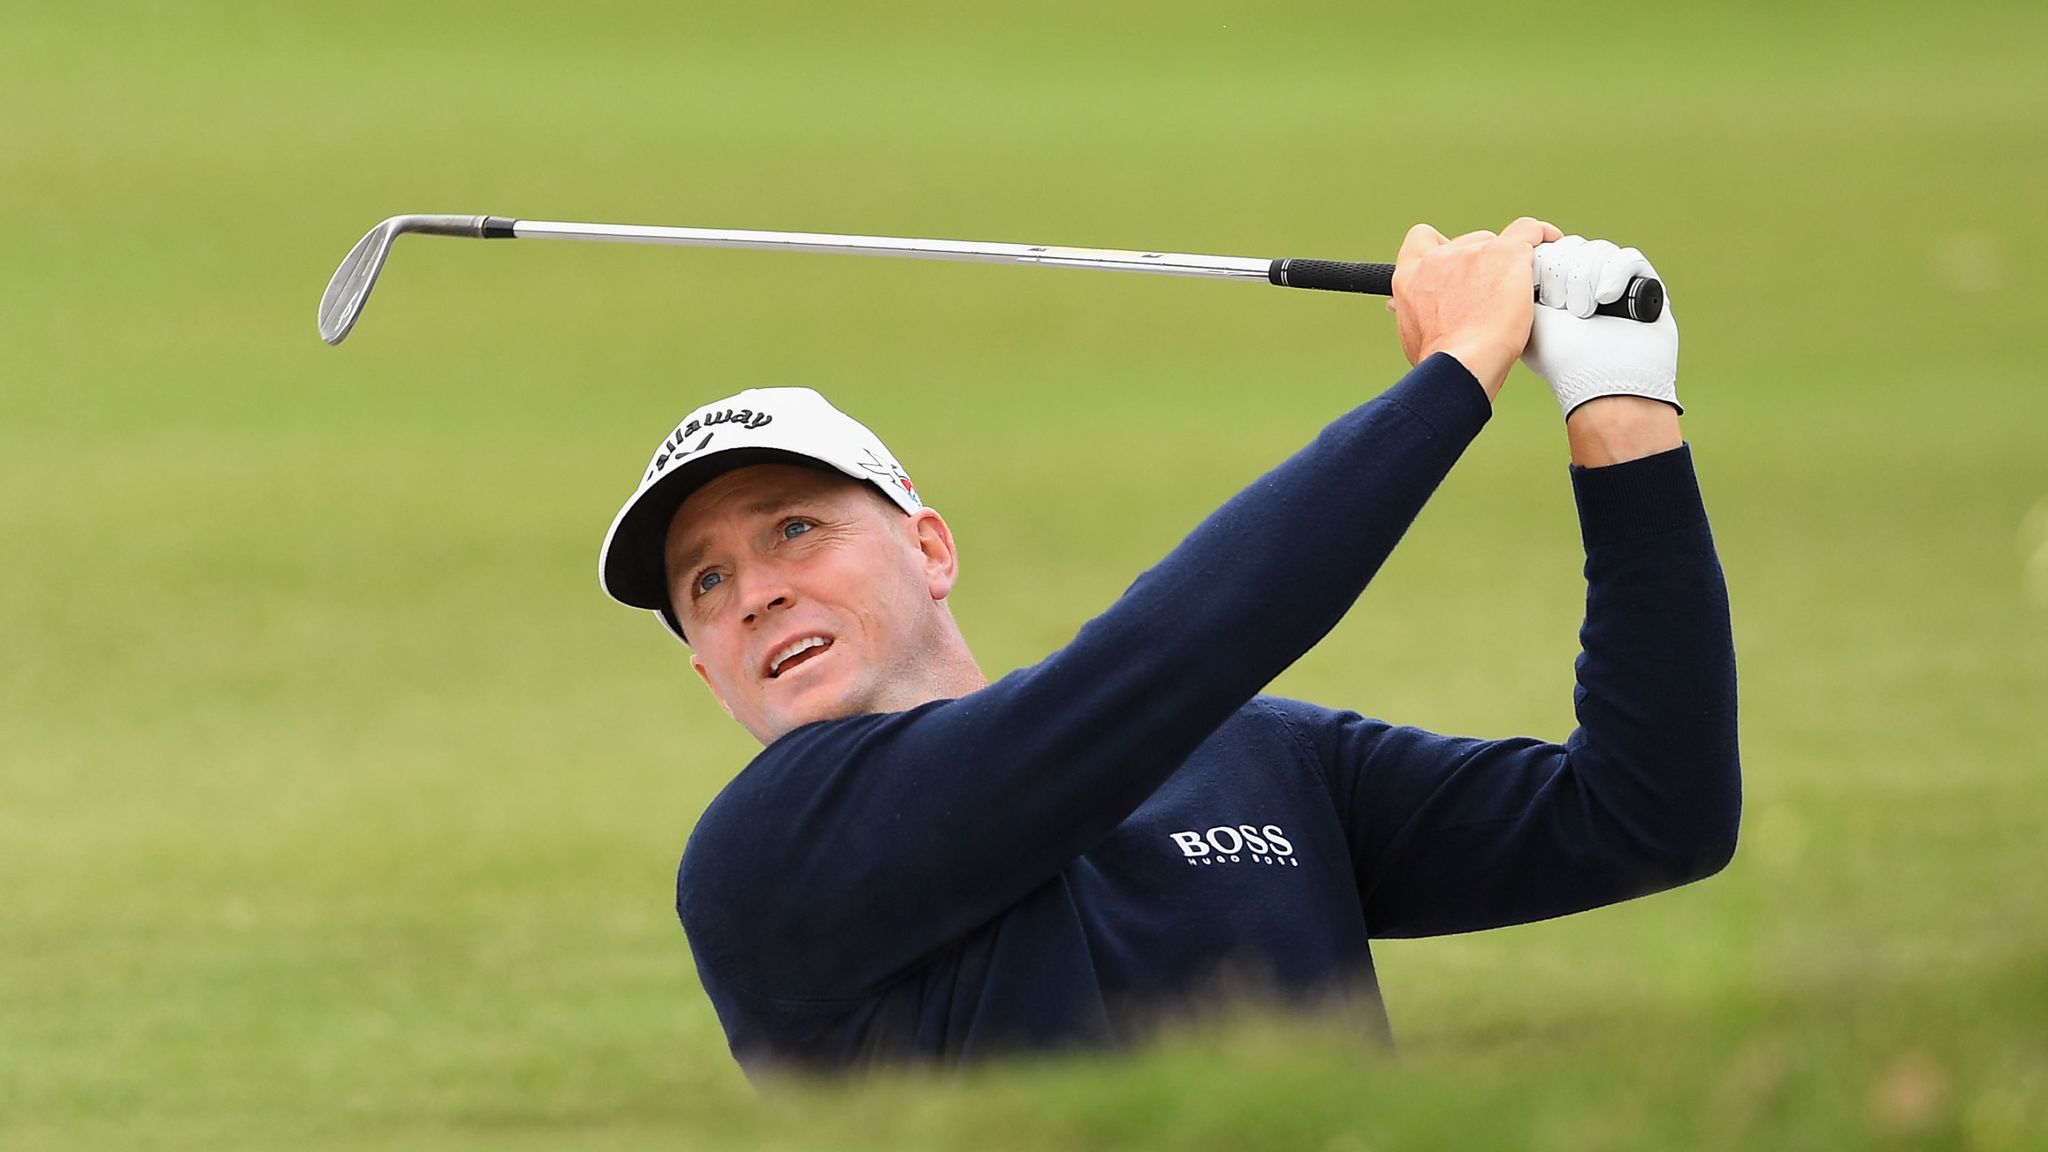 Alex Noren embraces quirky Perth World Super 6 golf tournament